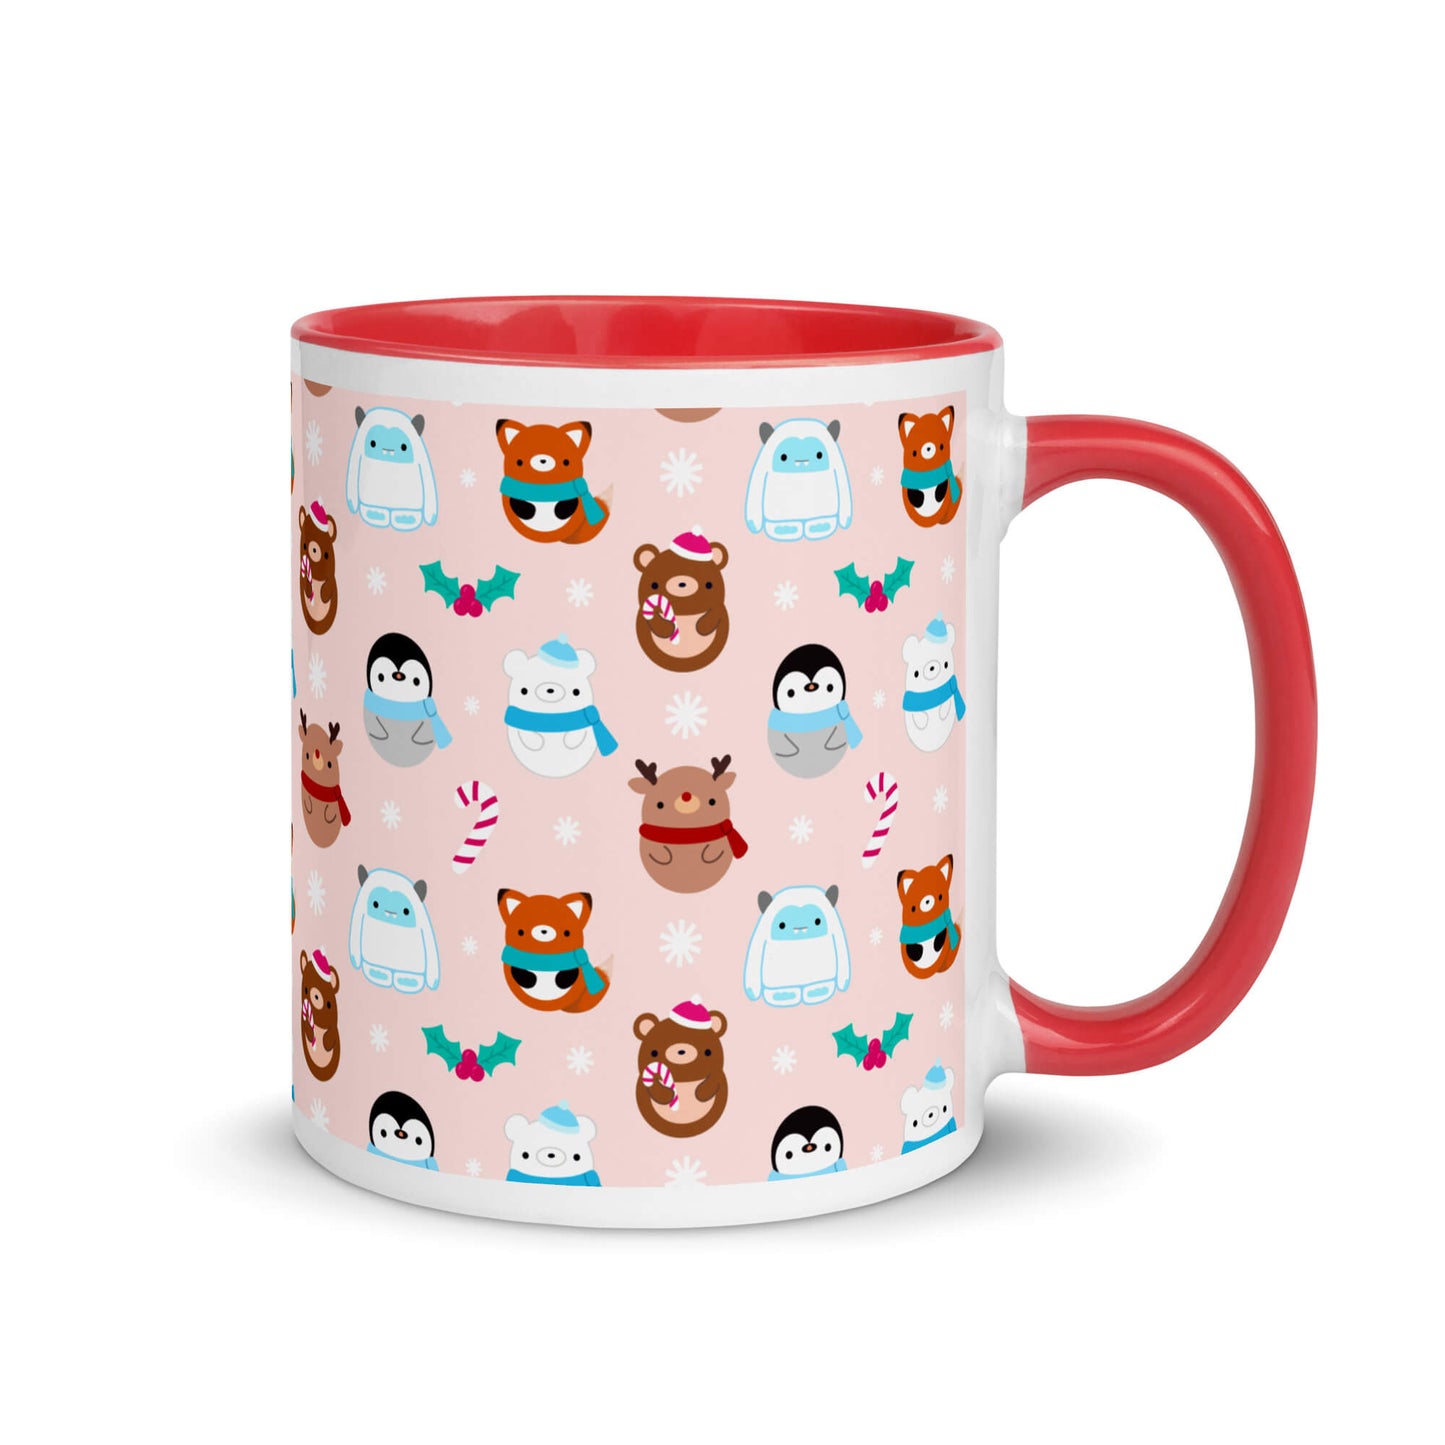 Red Christmas Coffee Mug - Yetis, Reindeer, Penguins, Bears and Foxes